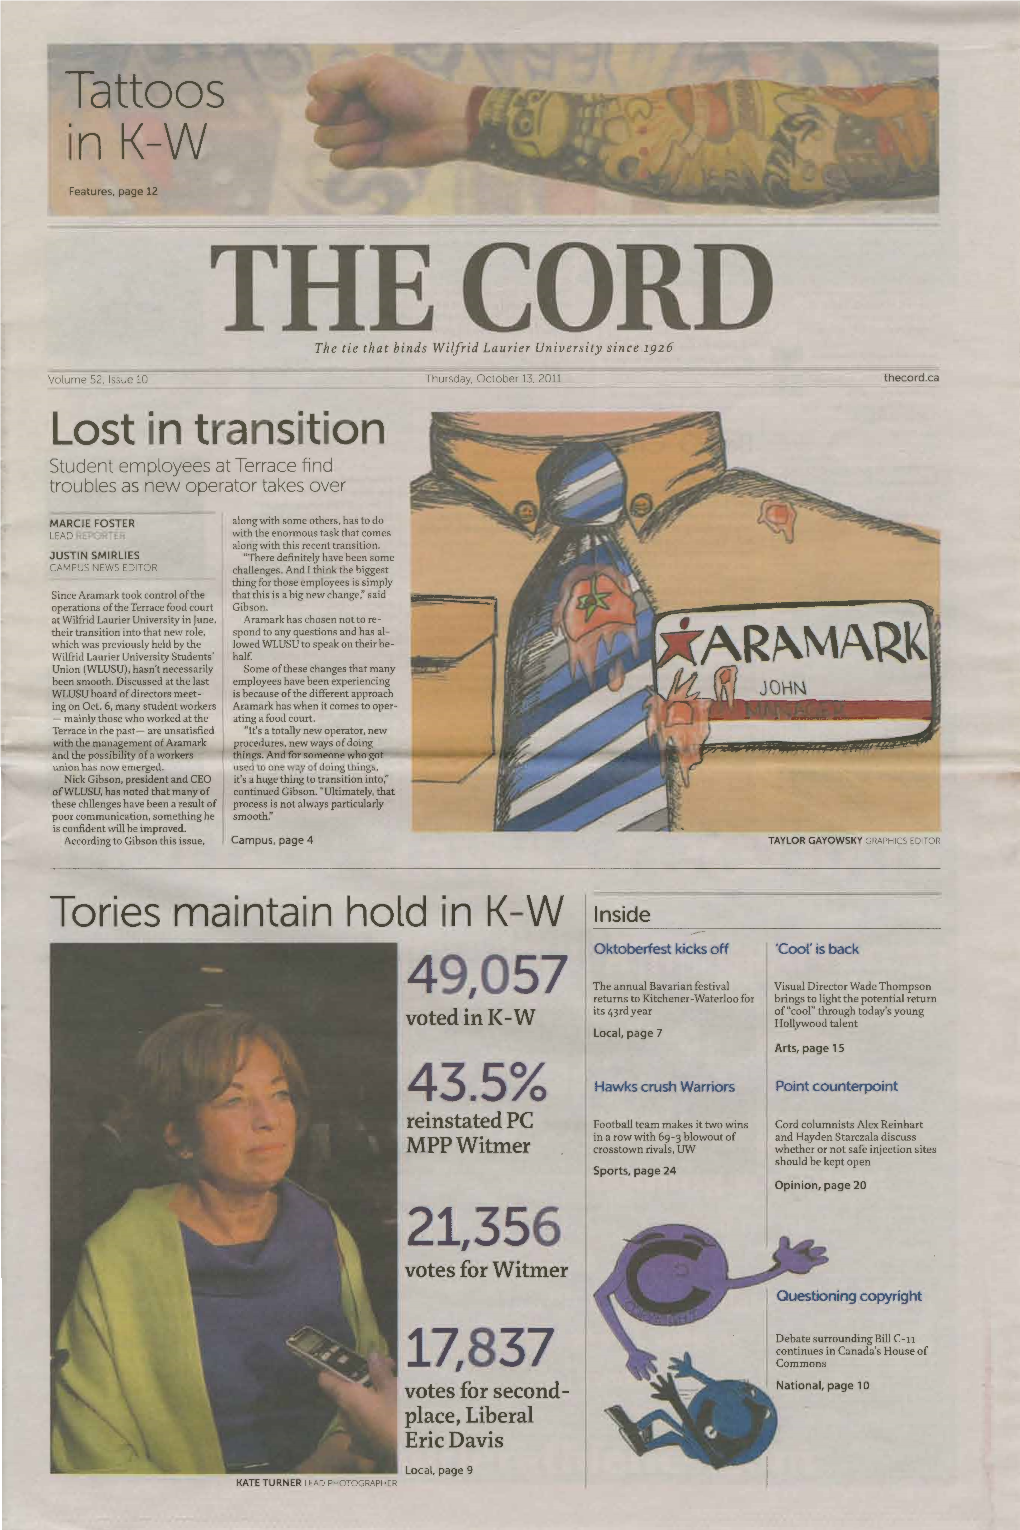 THE CORD • THURSDAY, OCTOBER 13, 2011 News